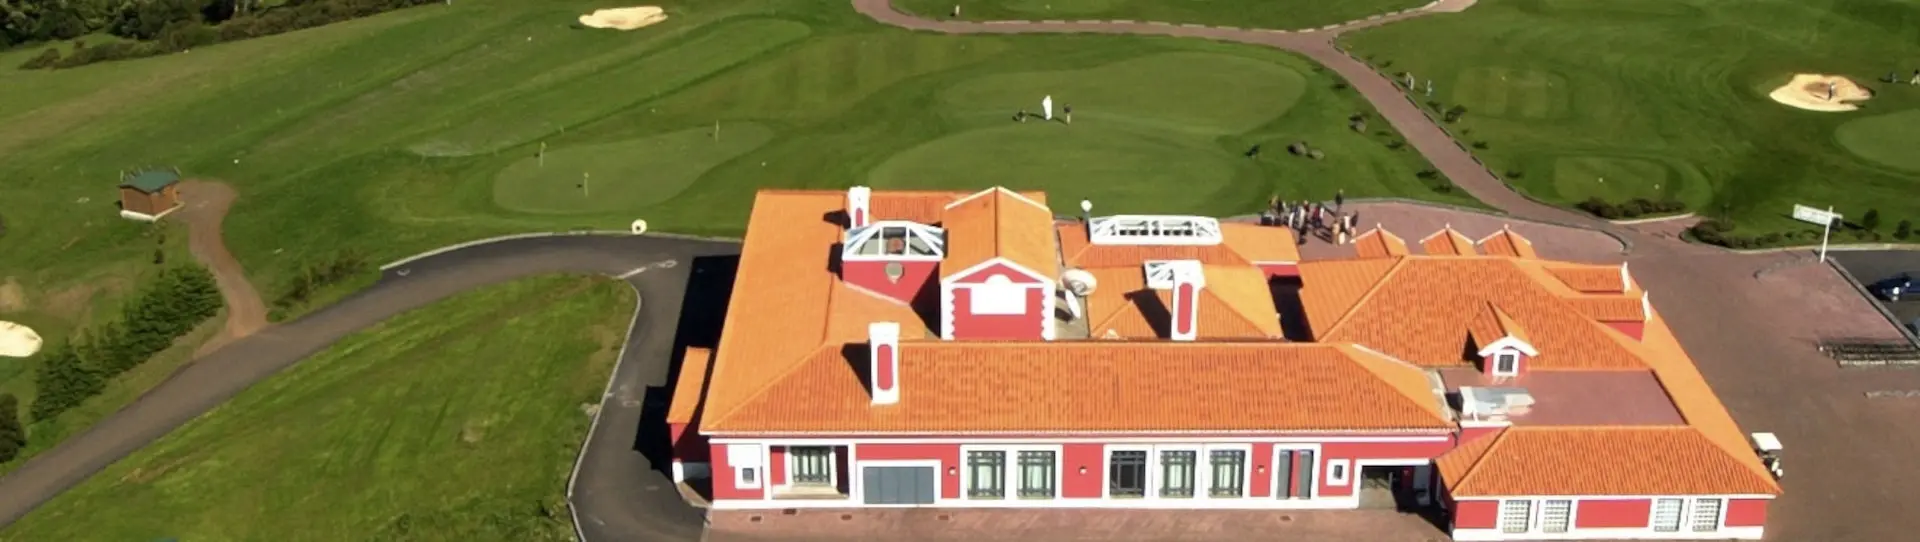 Portugal golf courses - Santo da Serra Golf - Photo 2